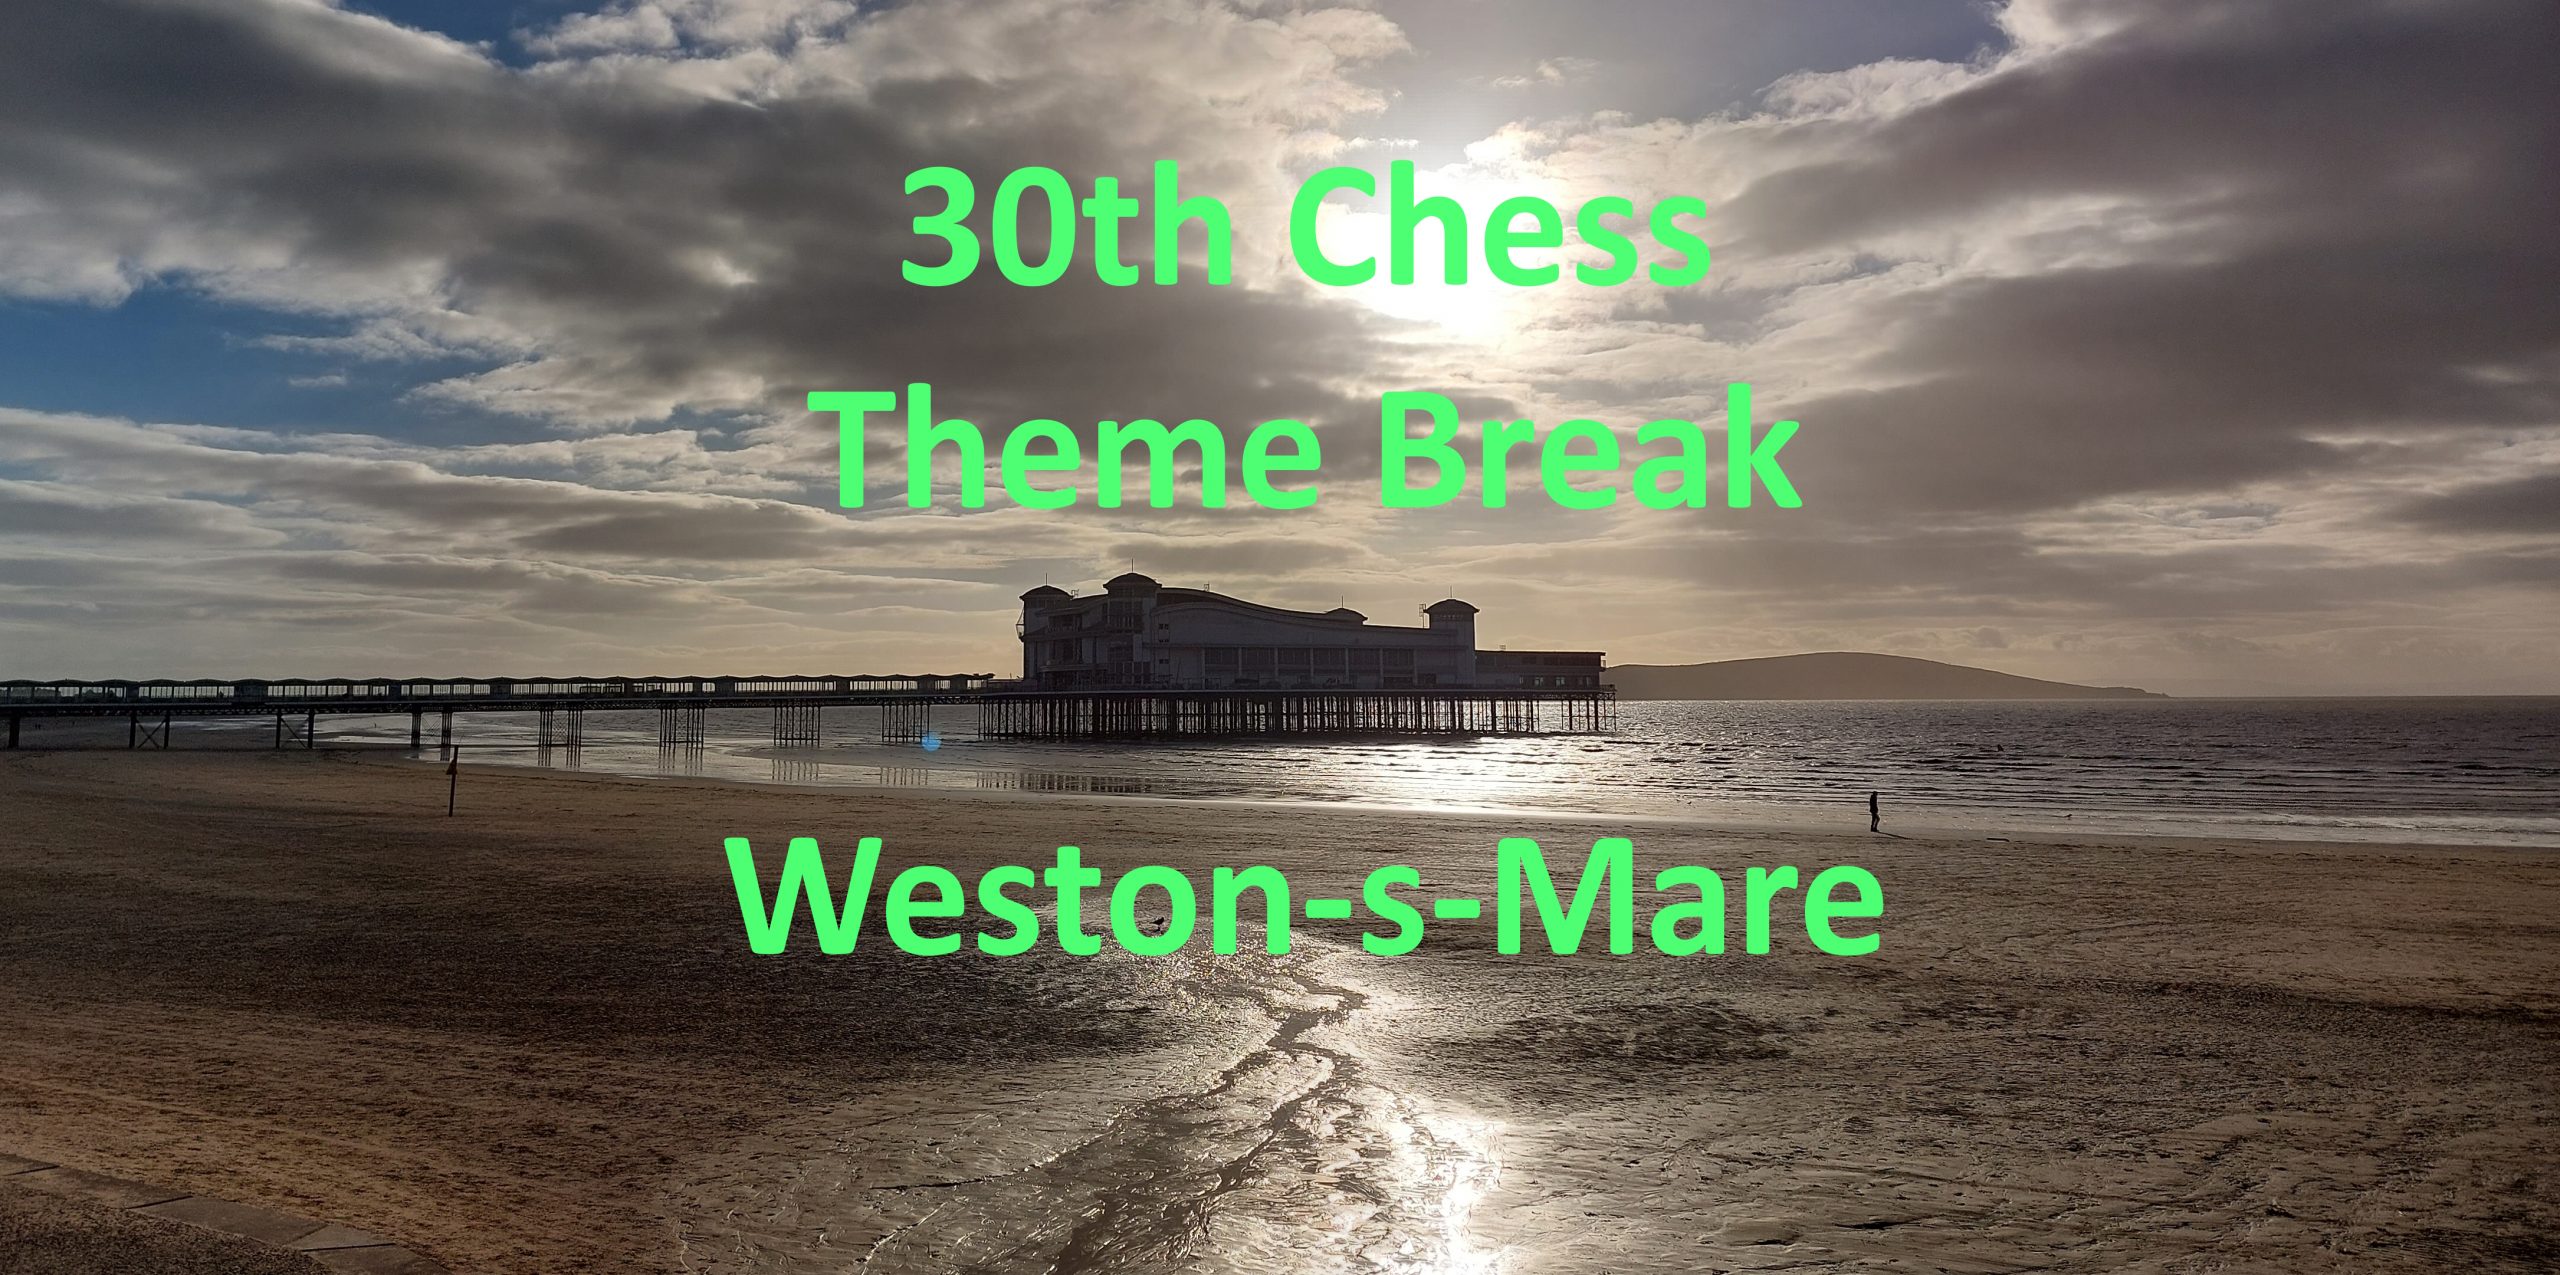 The 30th Chess Theme Break